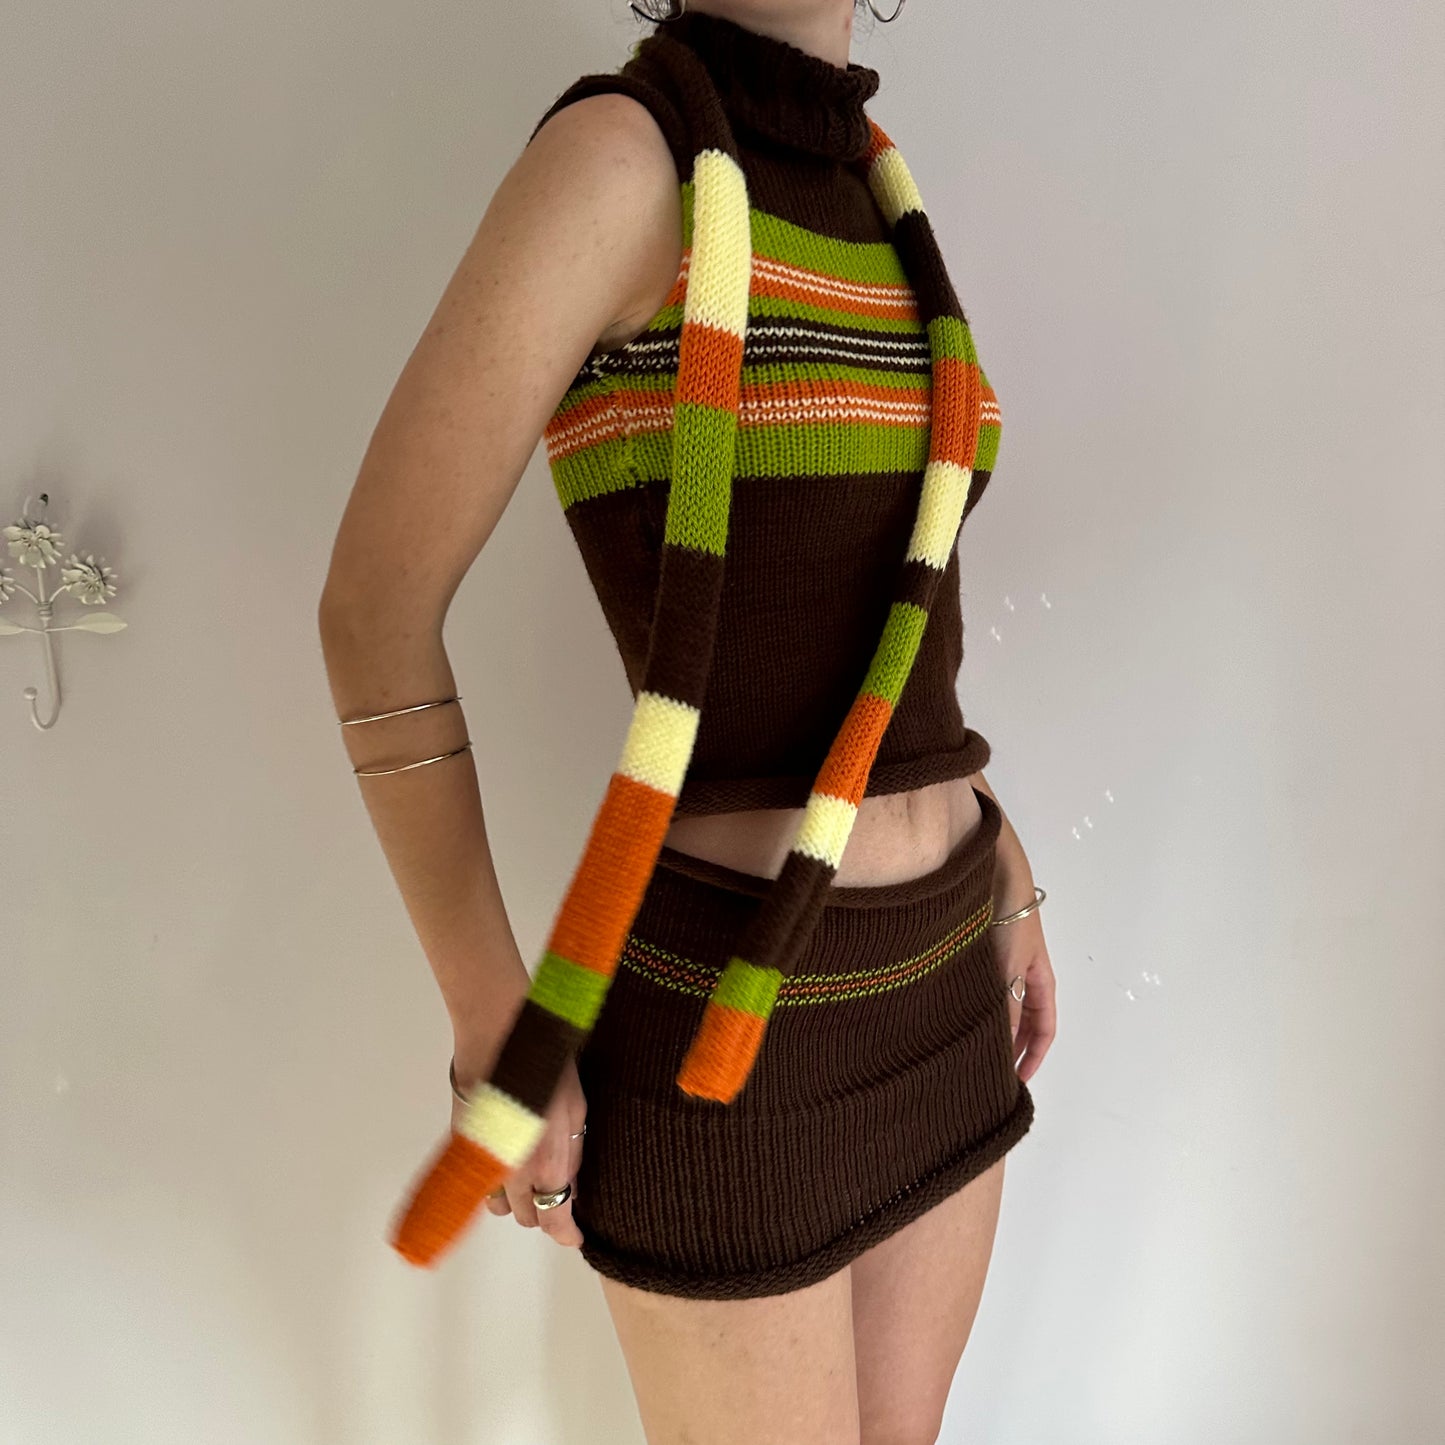 The Linea Skirt - striped knit mini skirt